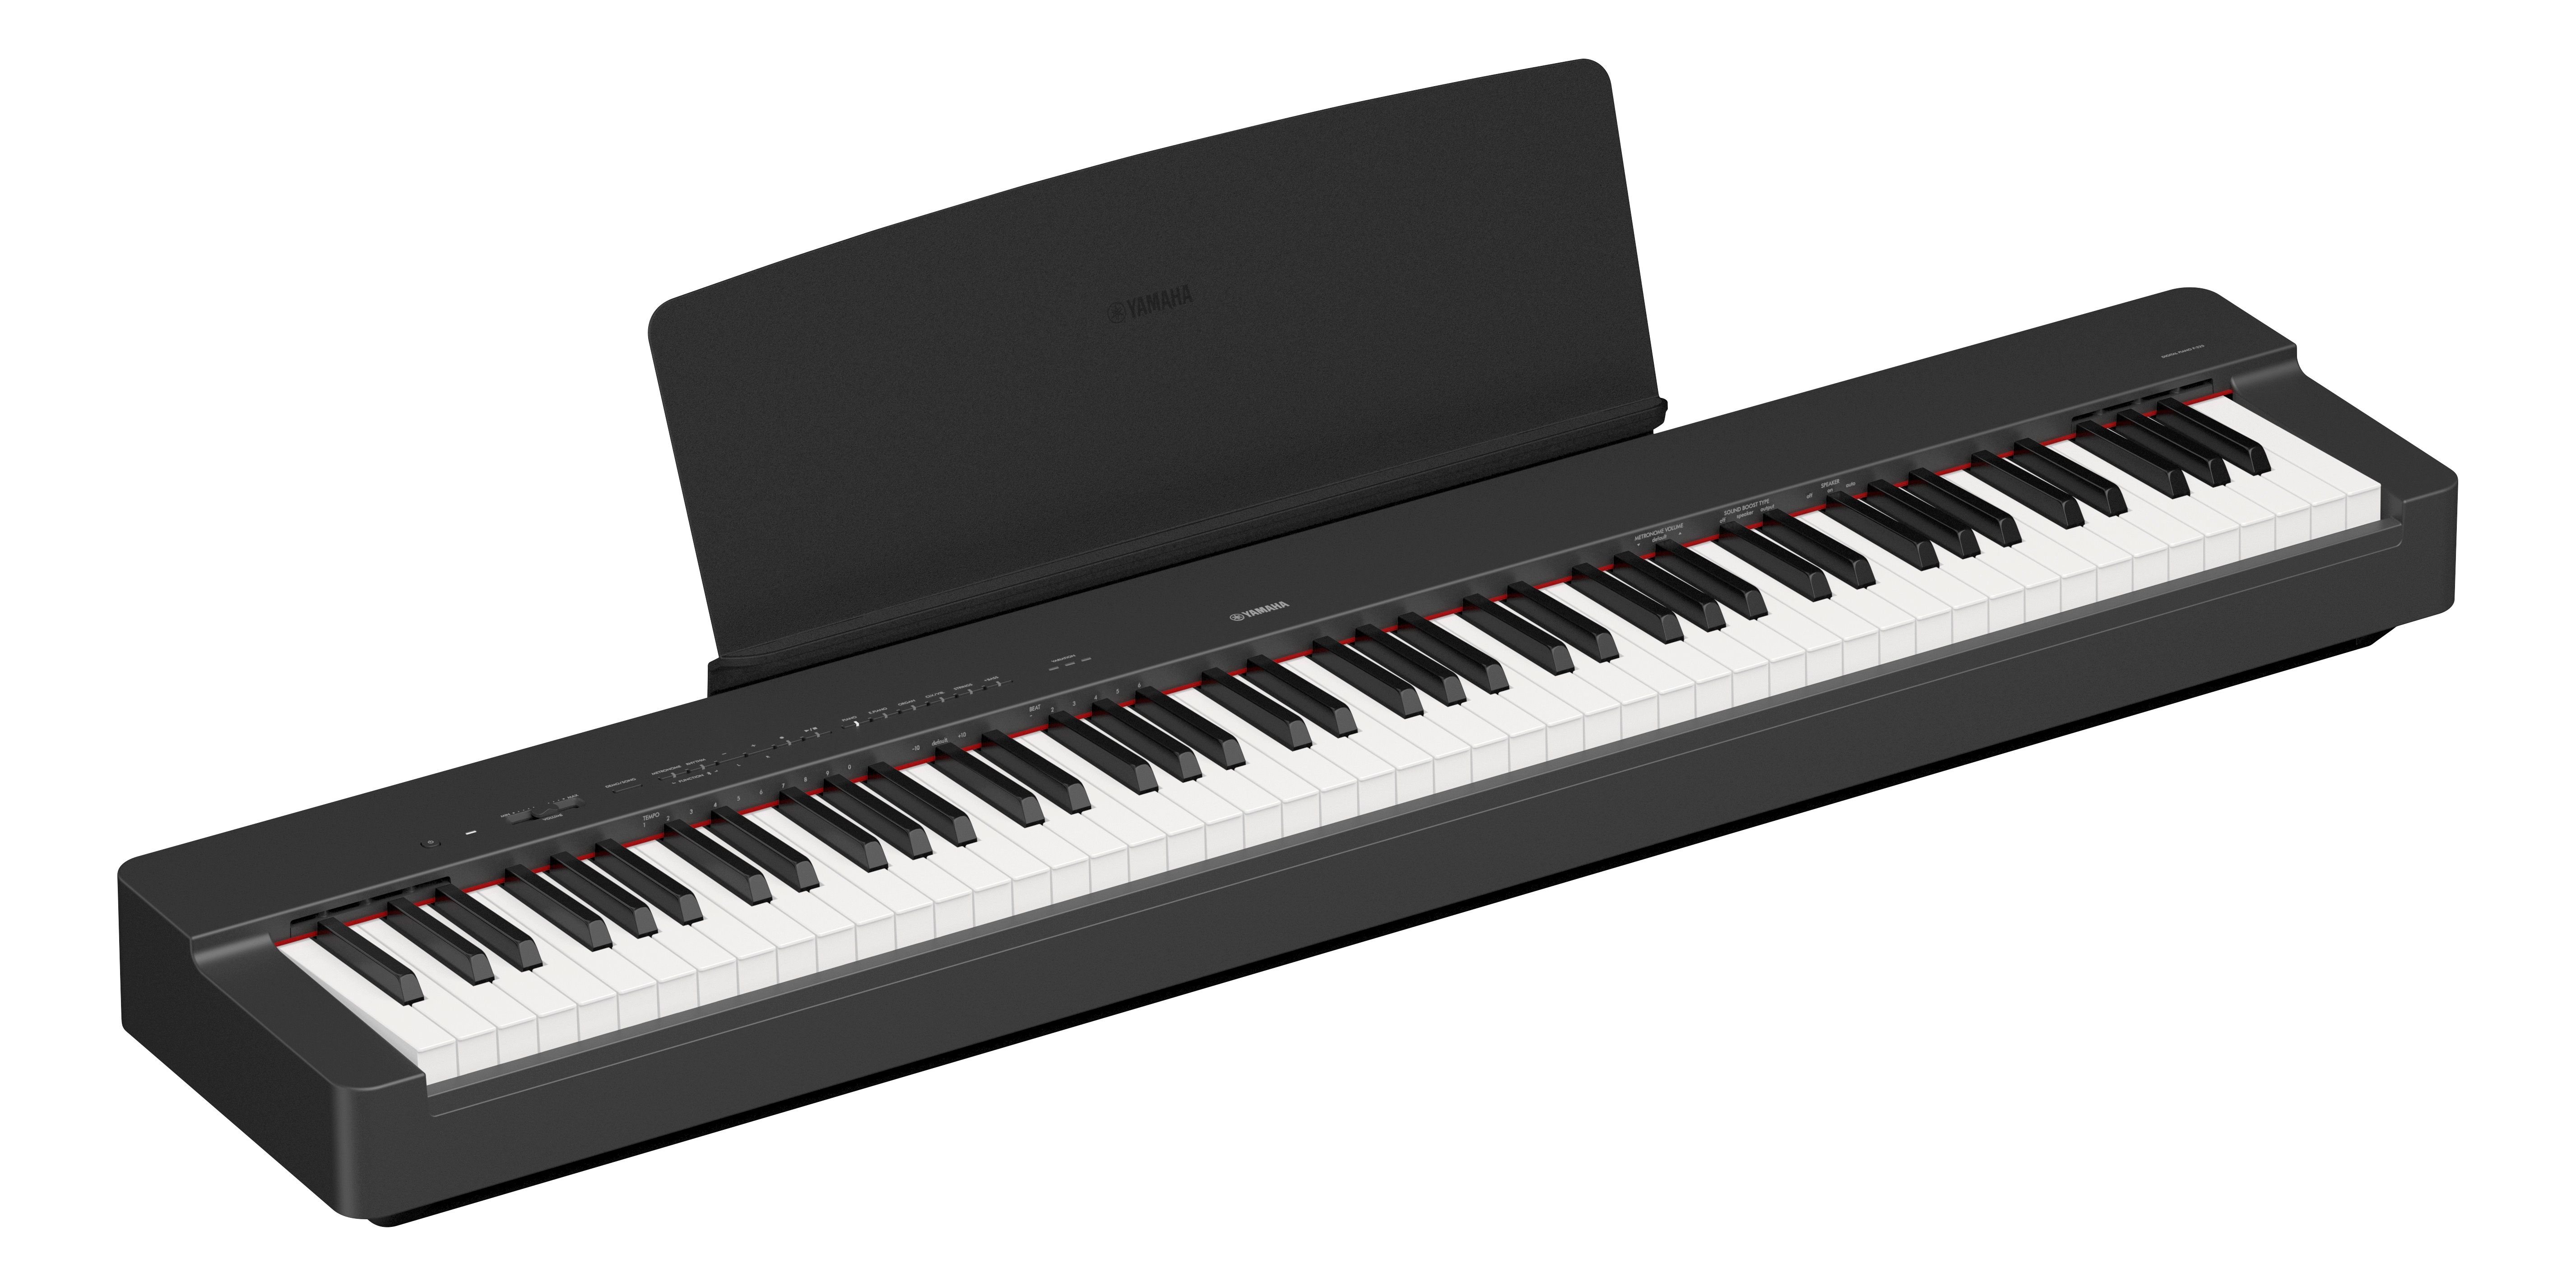 P-225 Black Portable digital piano Yamaha